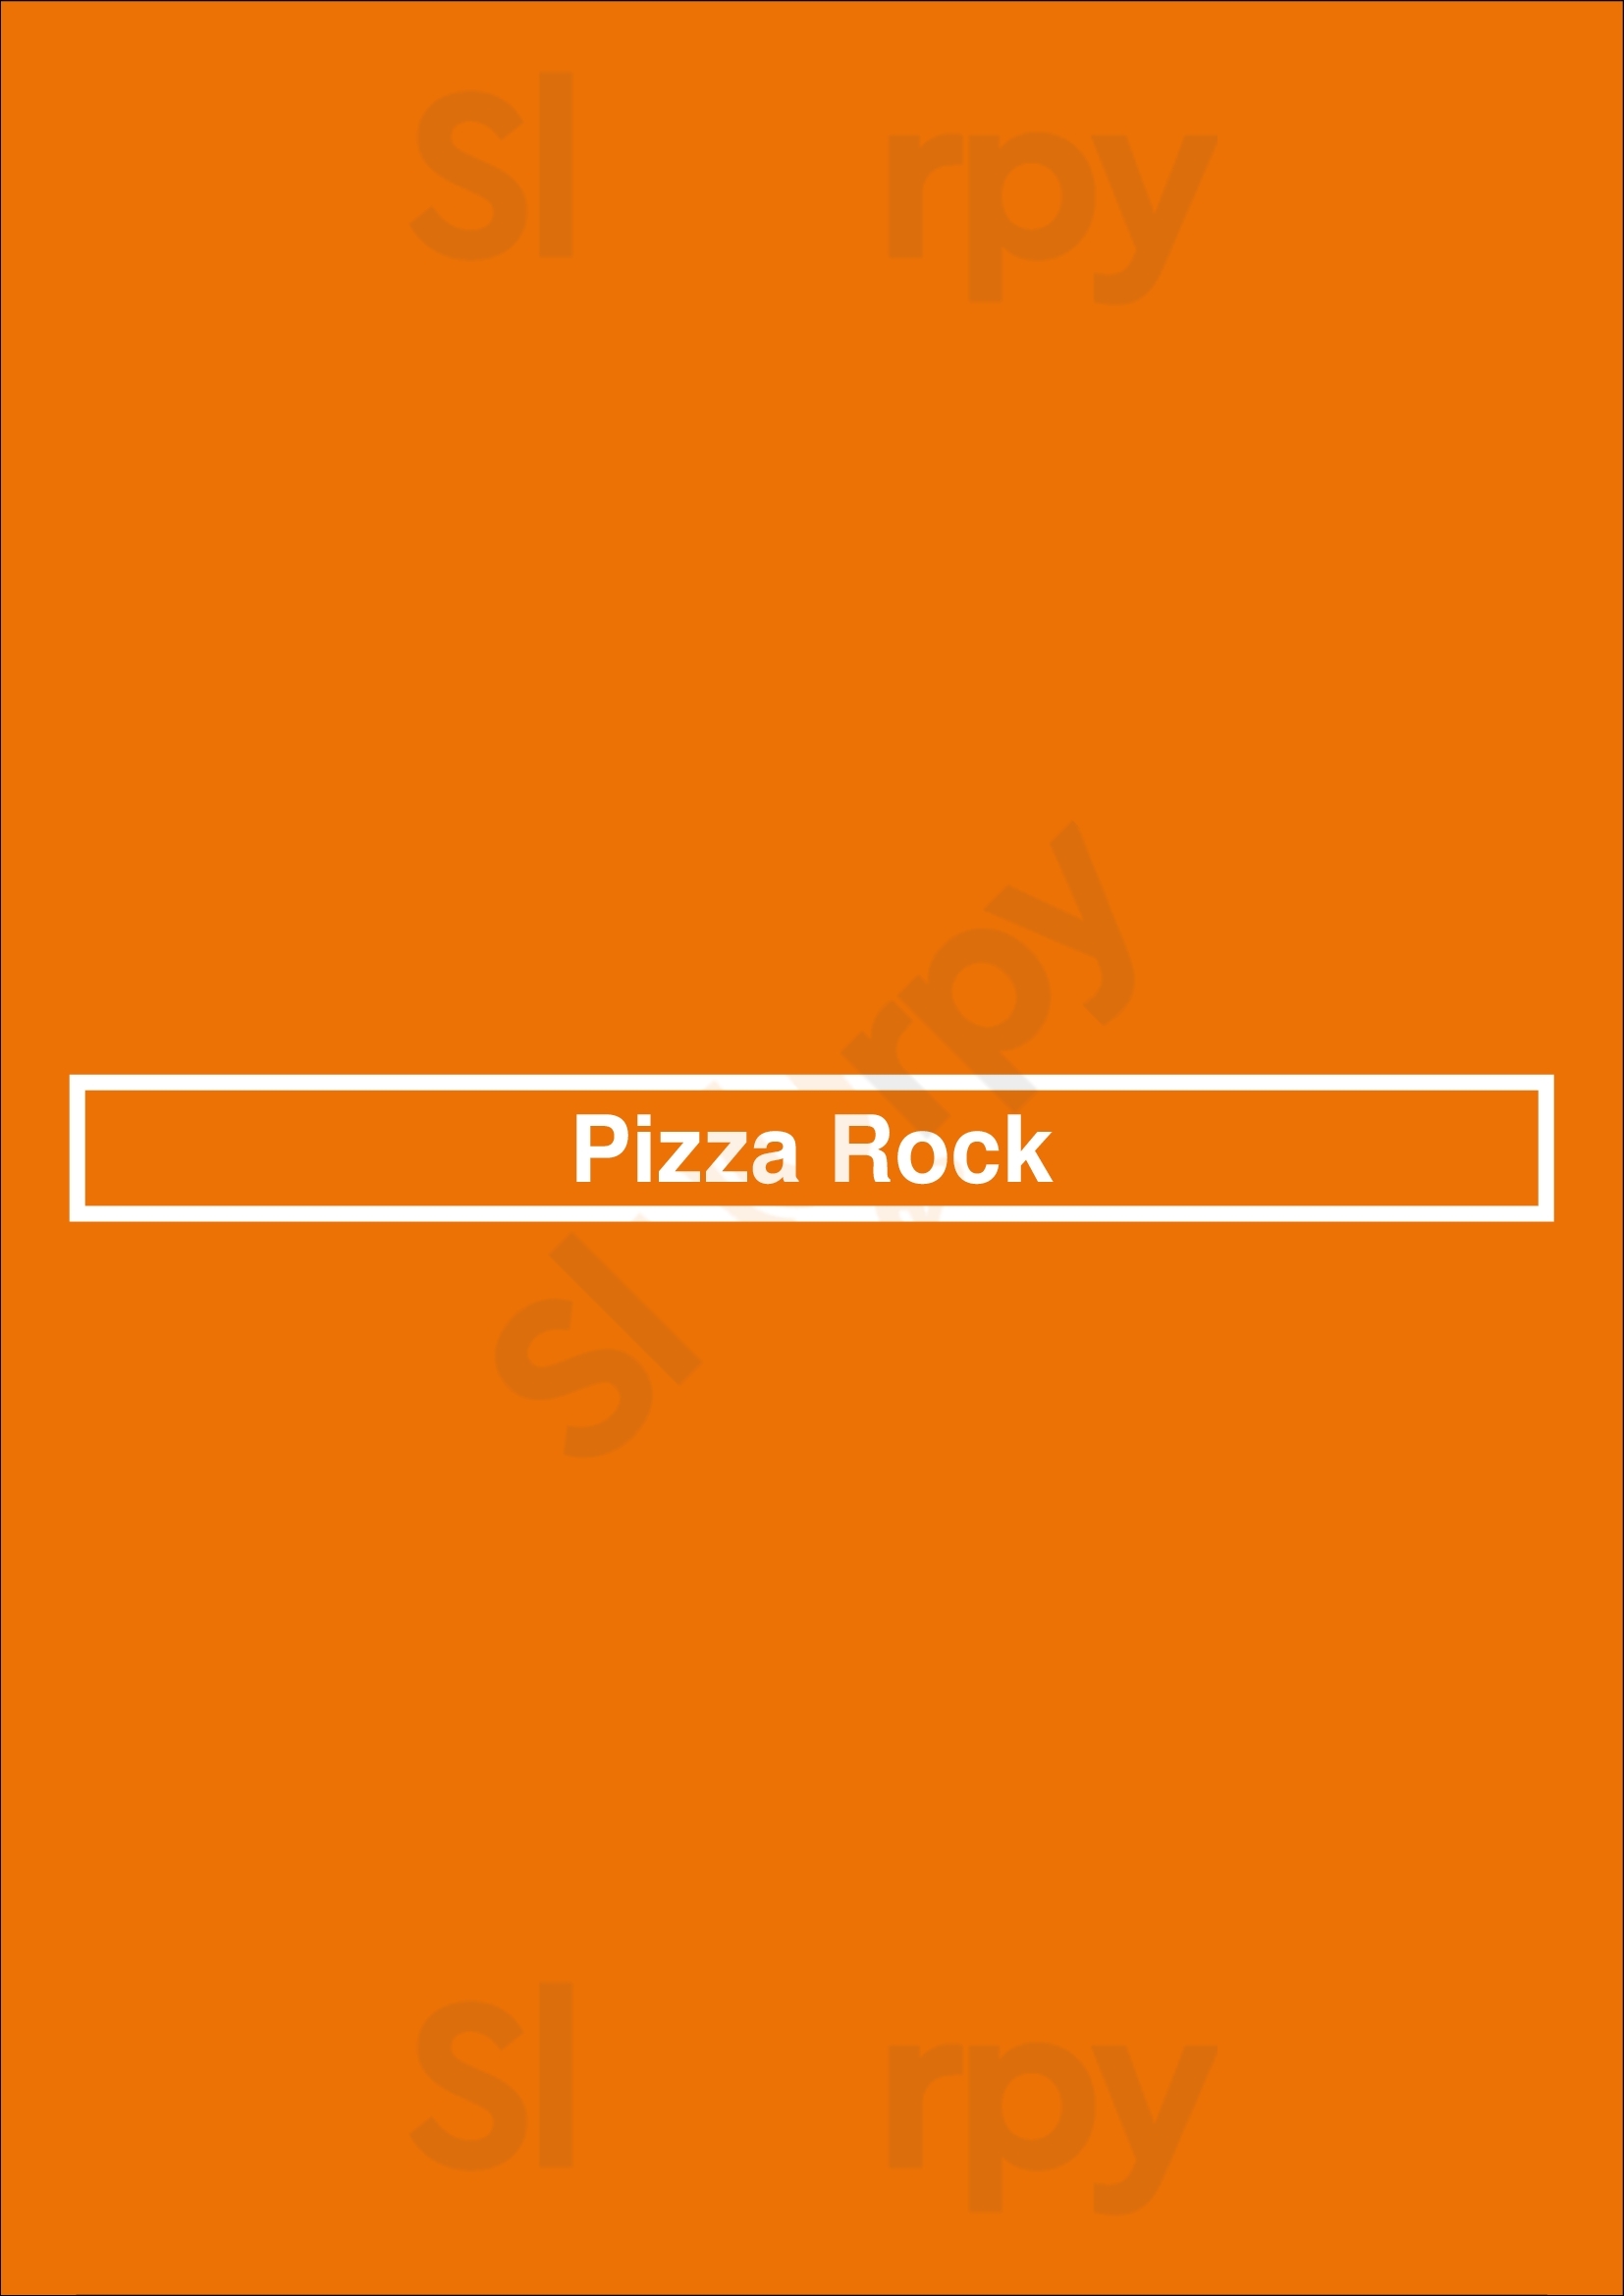 Pizza Rock Sacramento Menu - 1